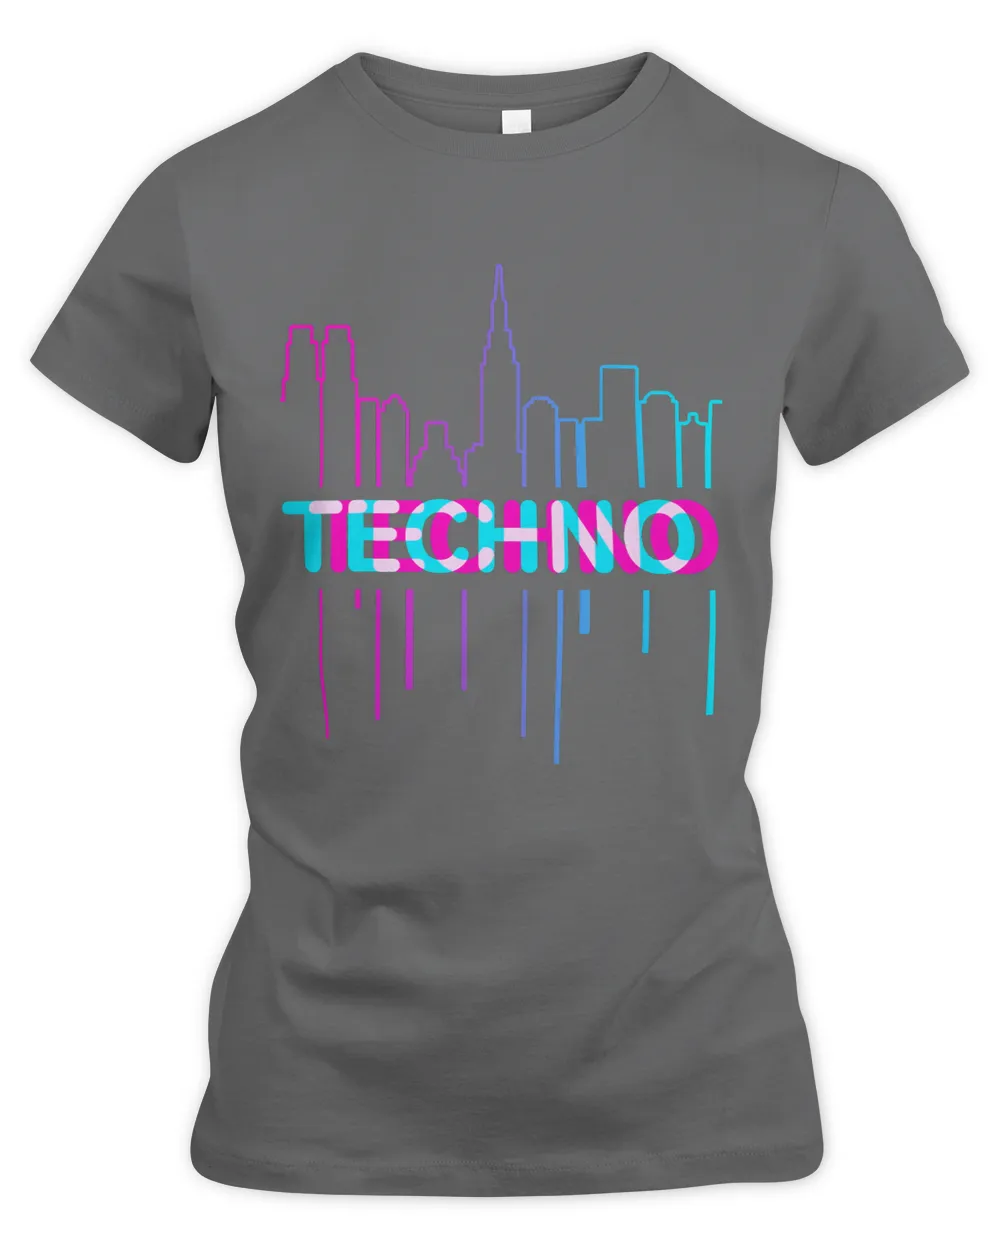 City techno electronic music